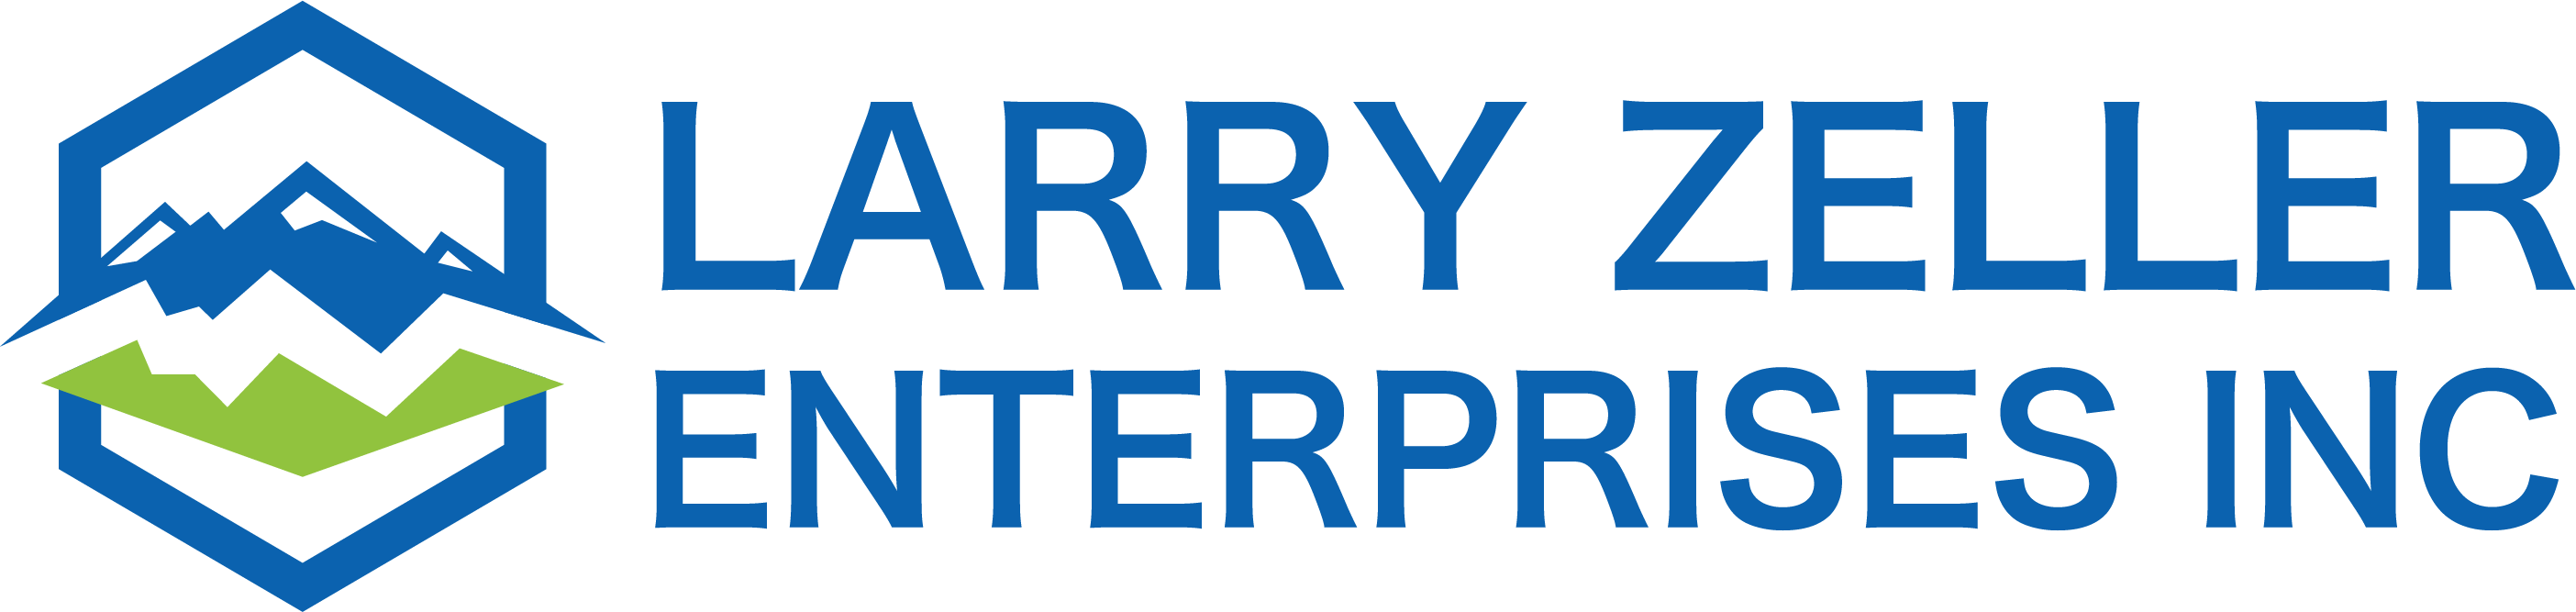 Larry Zeller Enterprises Inc.